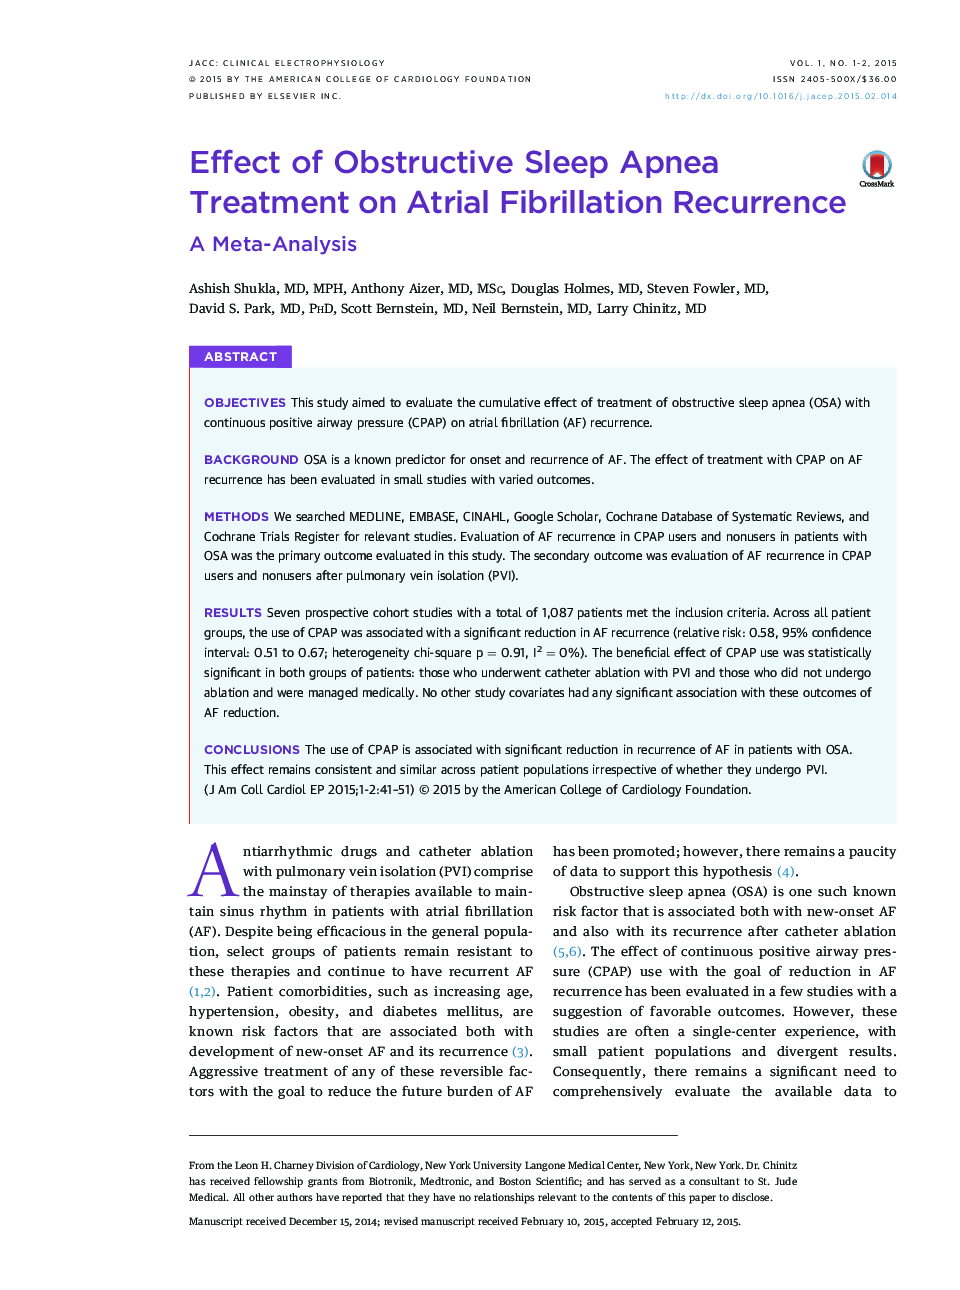 Effect of Obstructive Sleep Apnea Treatment on Atrial Fibrillation Recurrence : A Meta-Analysis